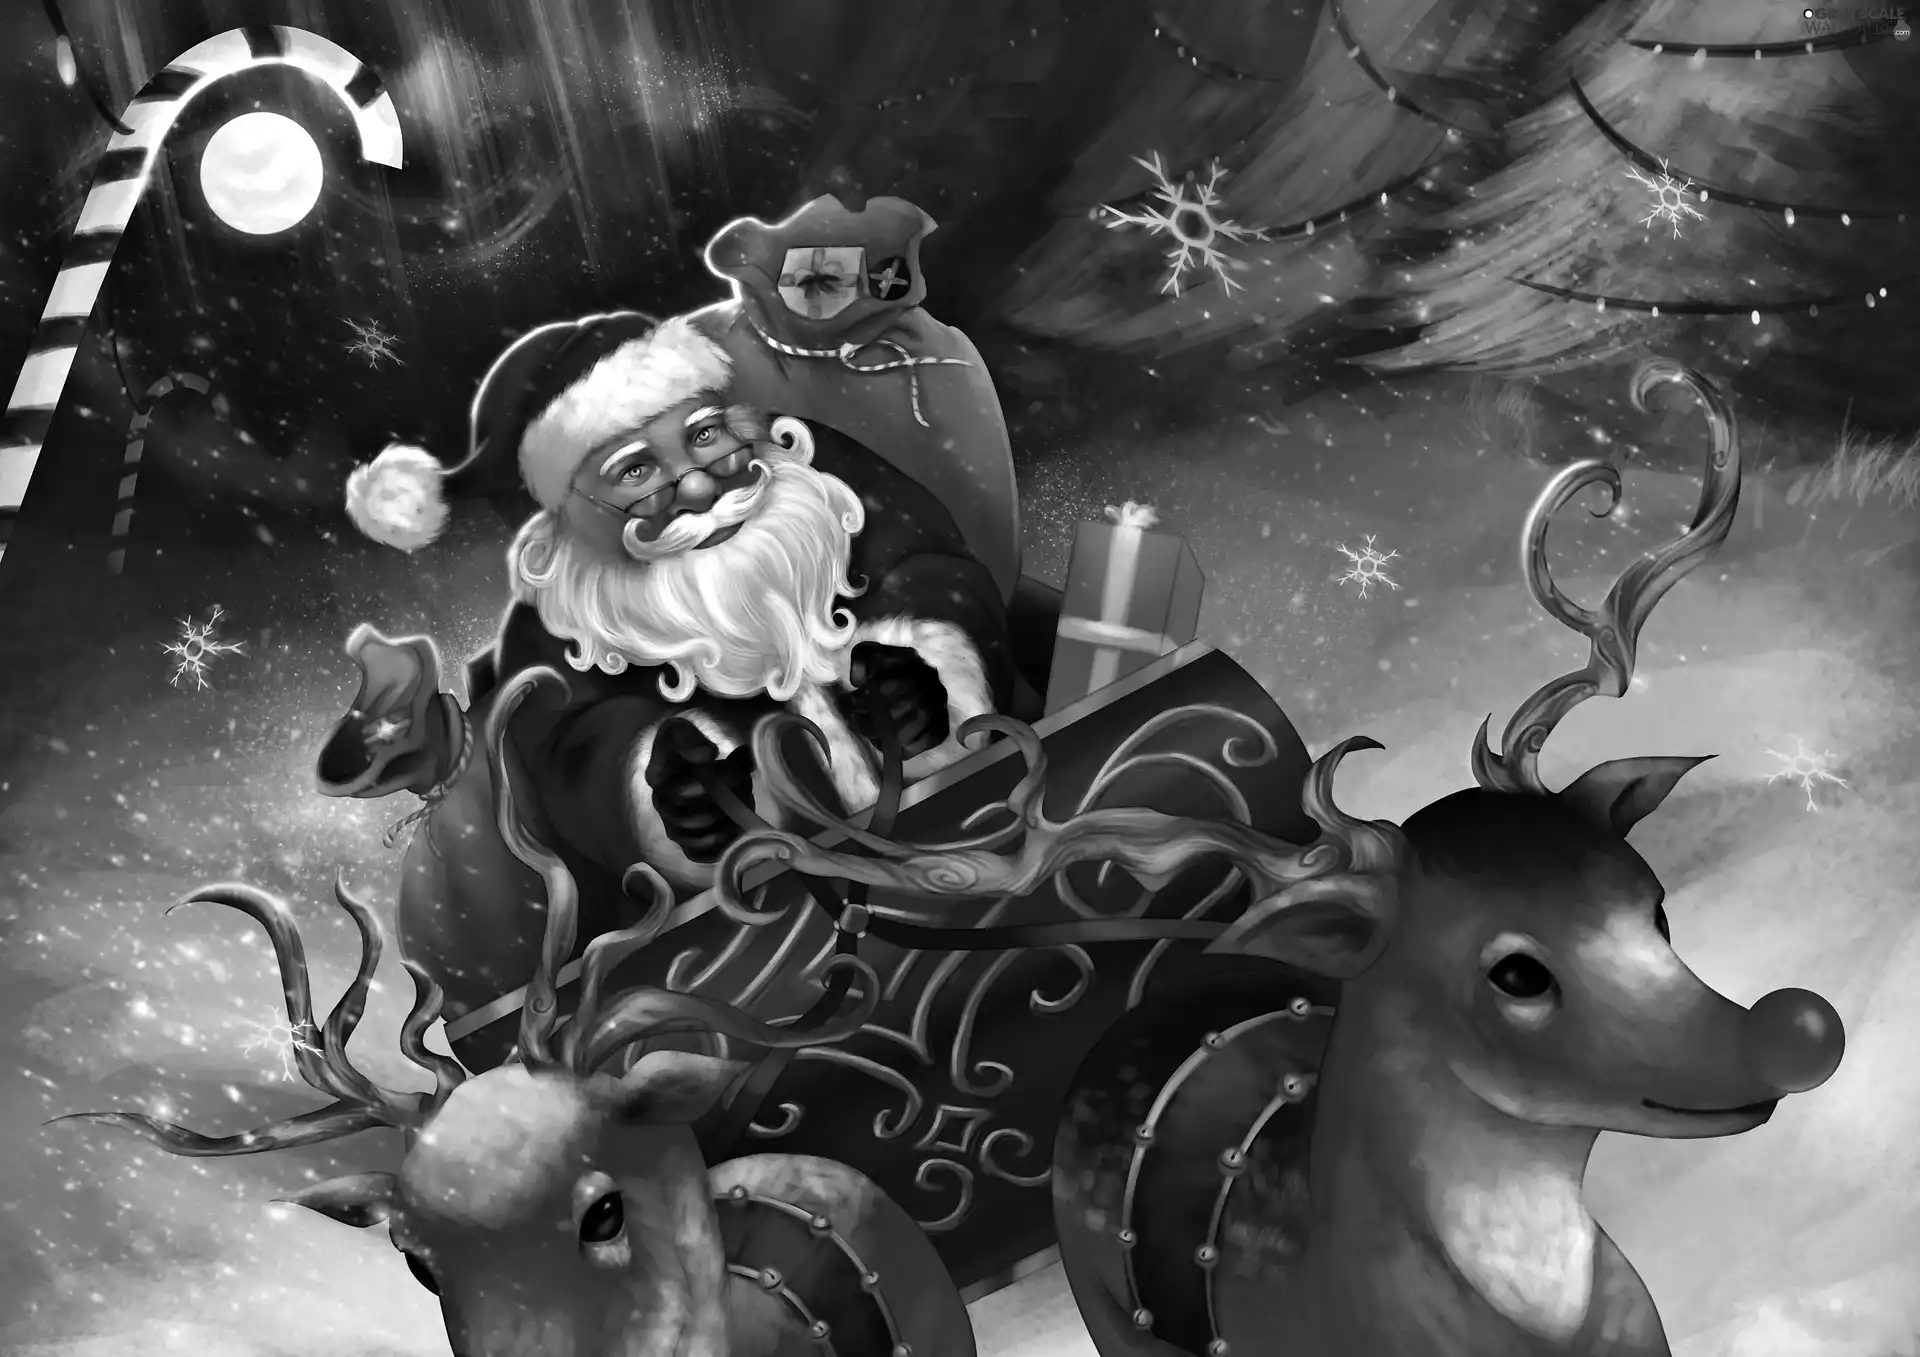 2D Graphics, Santa, sleigh